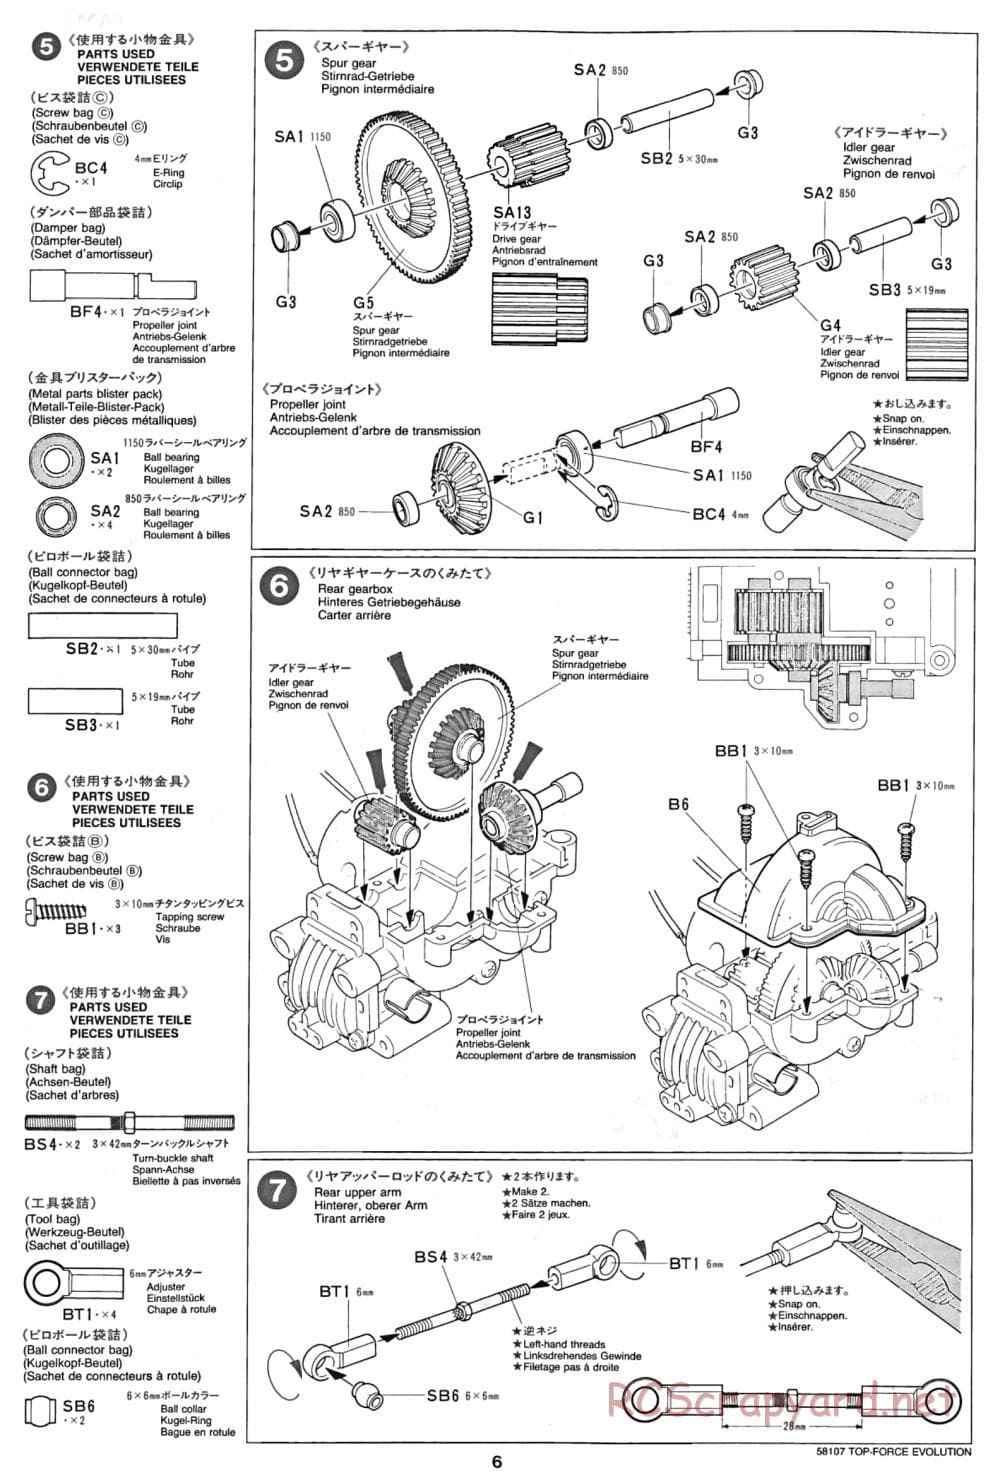 Tamiya - Top Force Evolution Chassis - Manual - Page 6